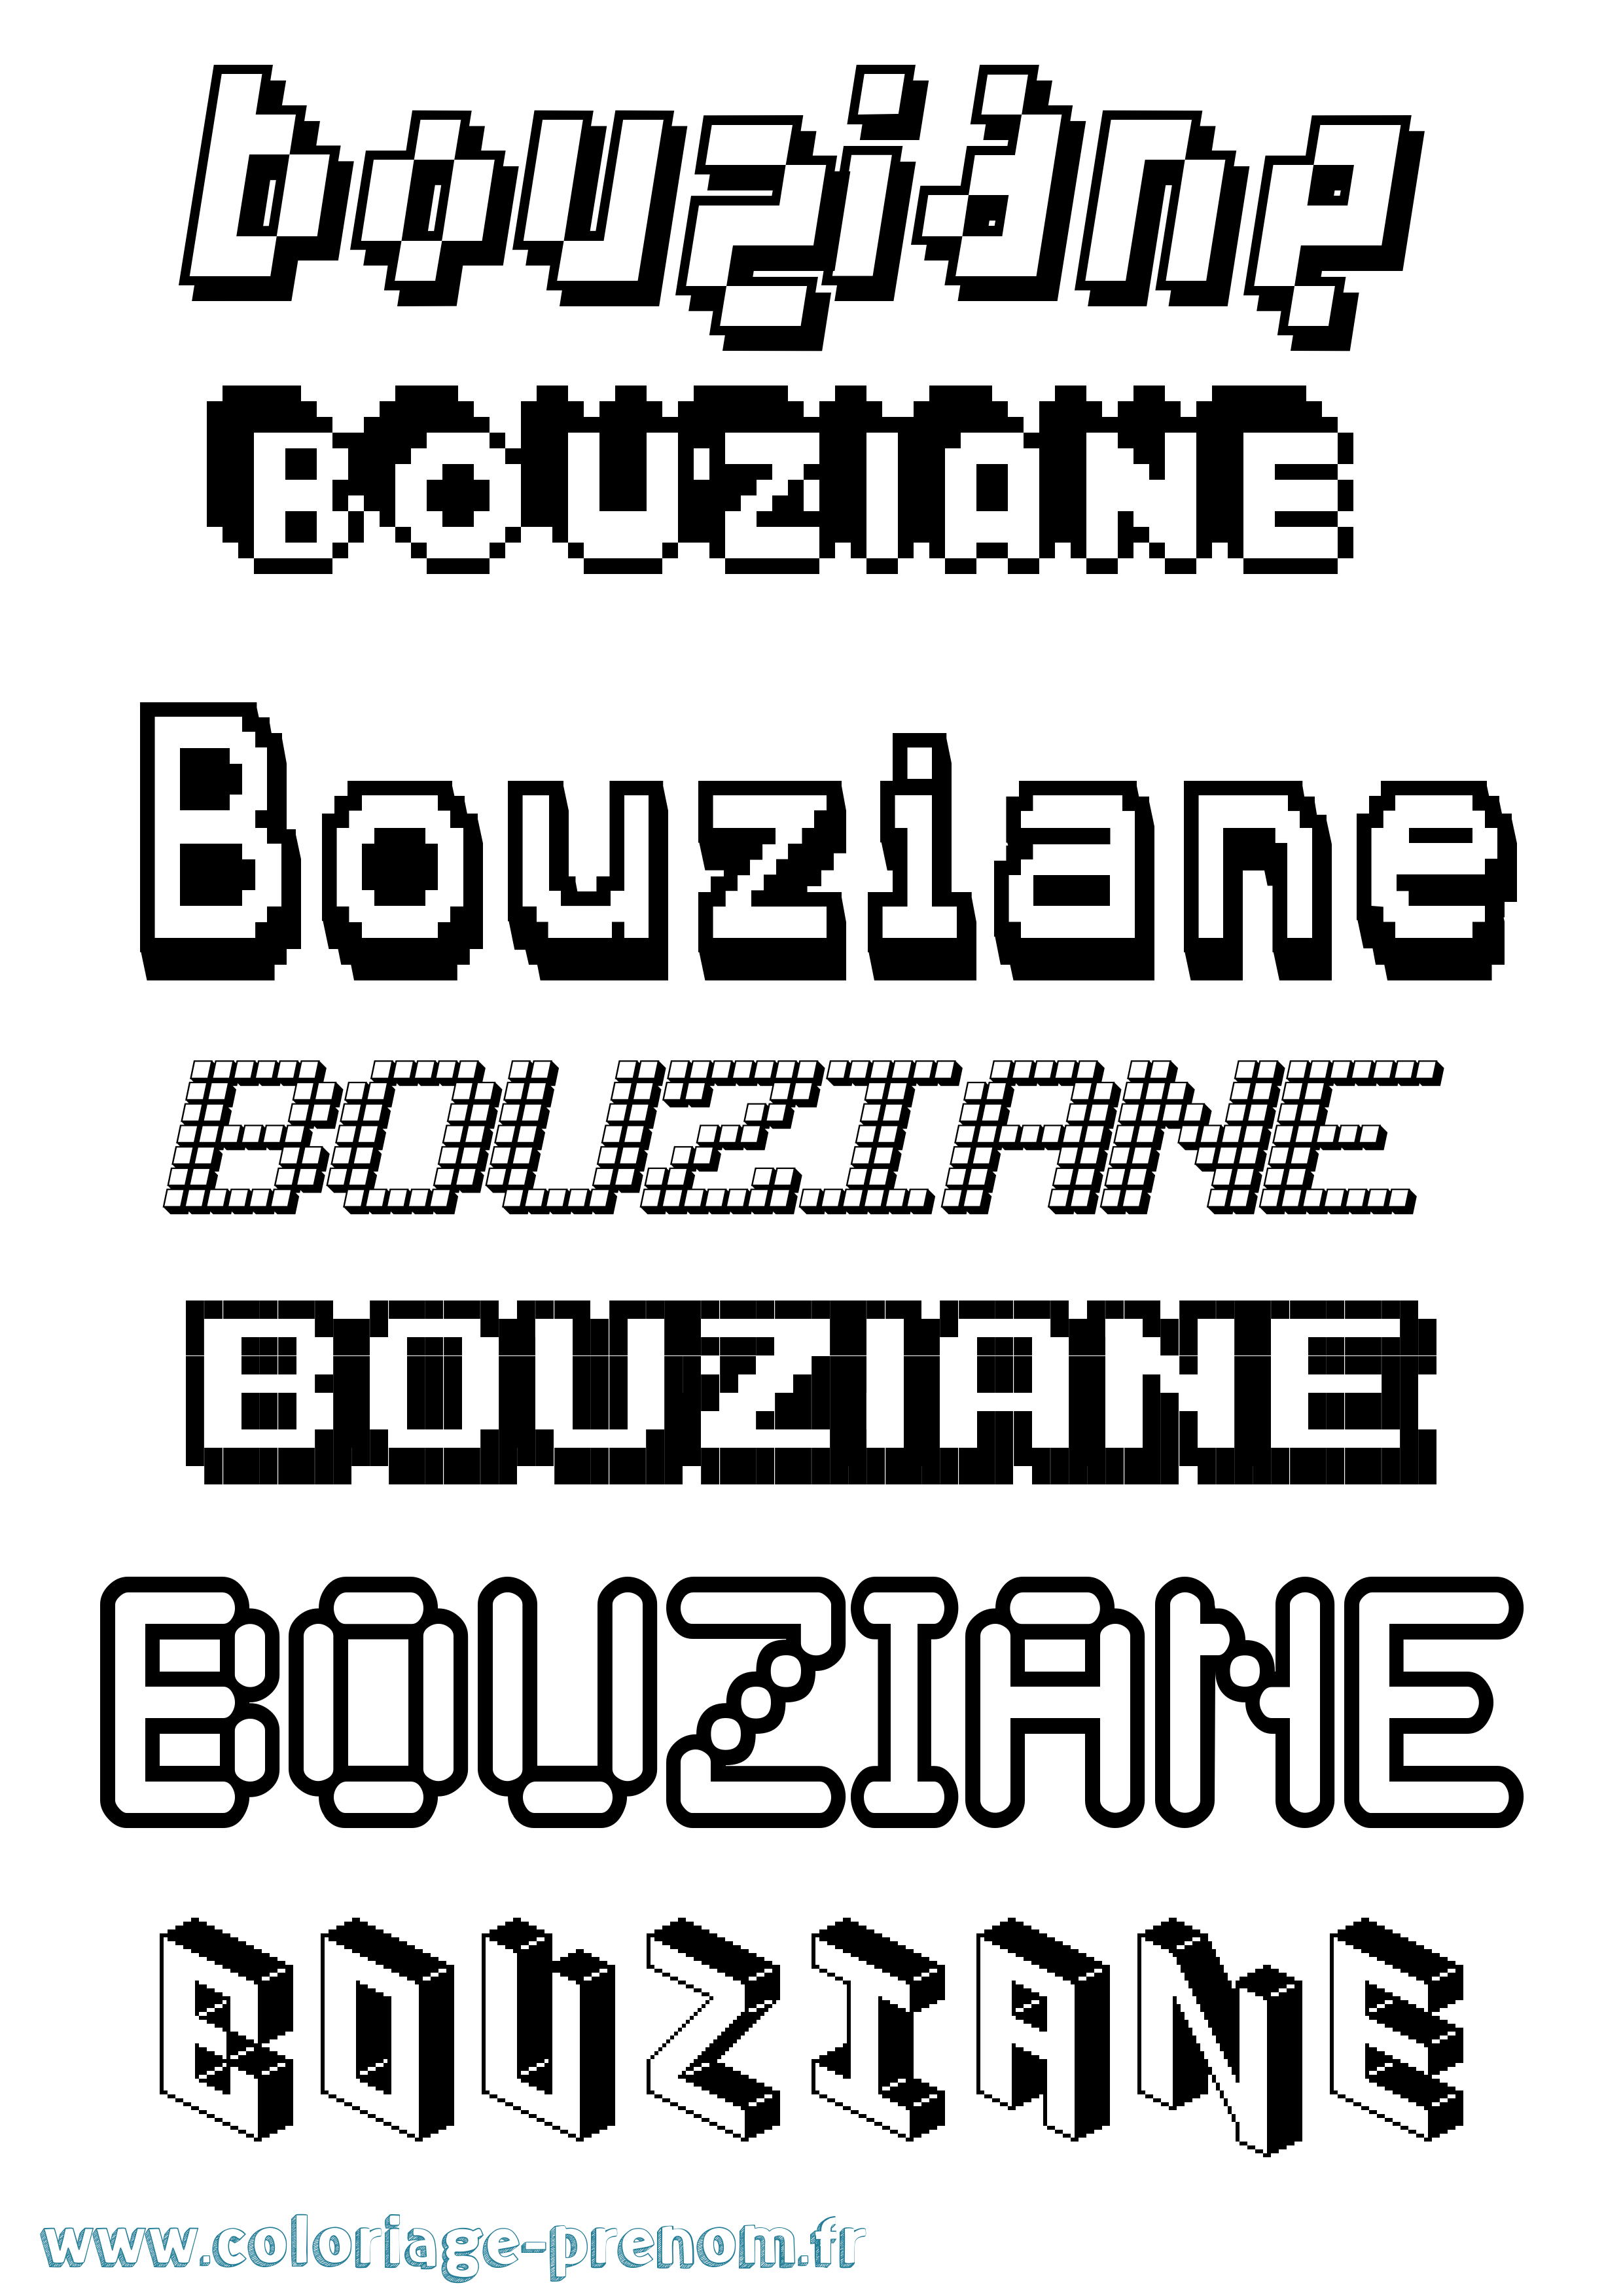 Coloriage prénom Bouziane Pixel